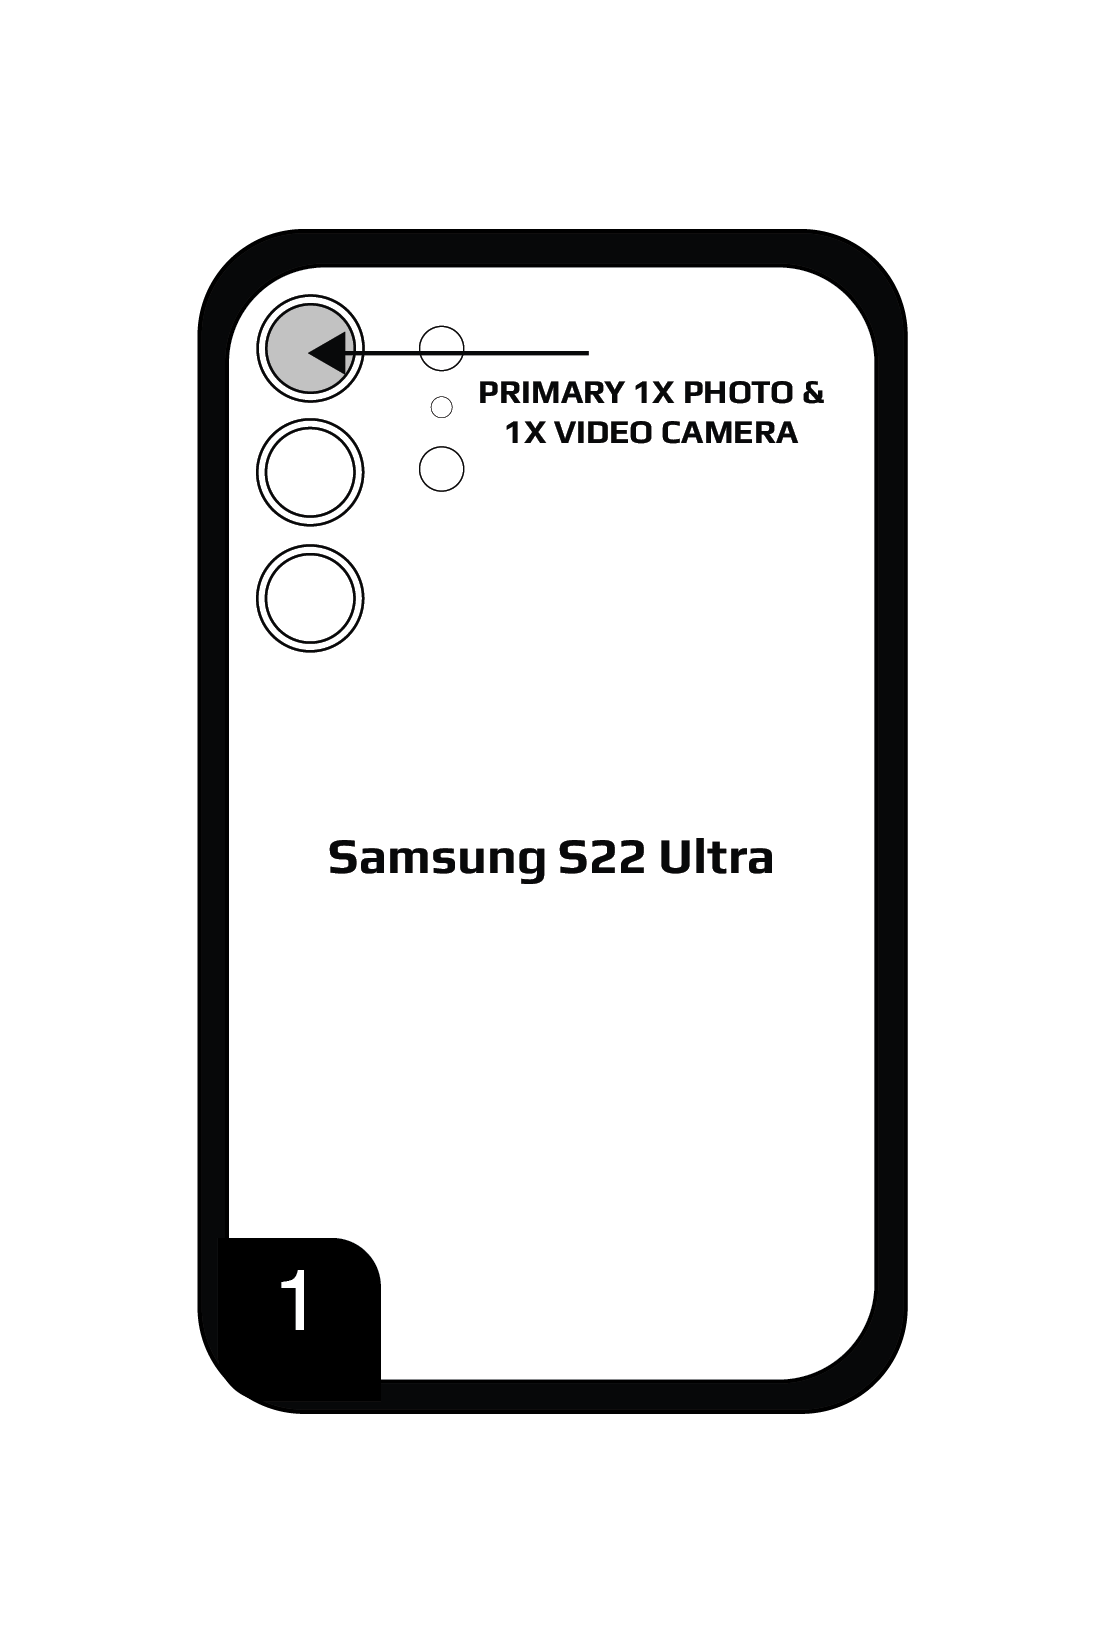 Samsung S22 ultra camera step 1